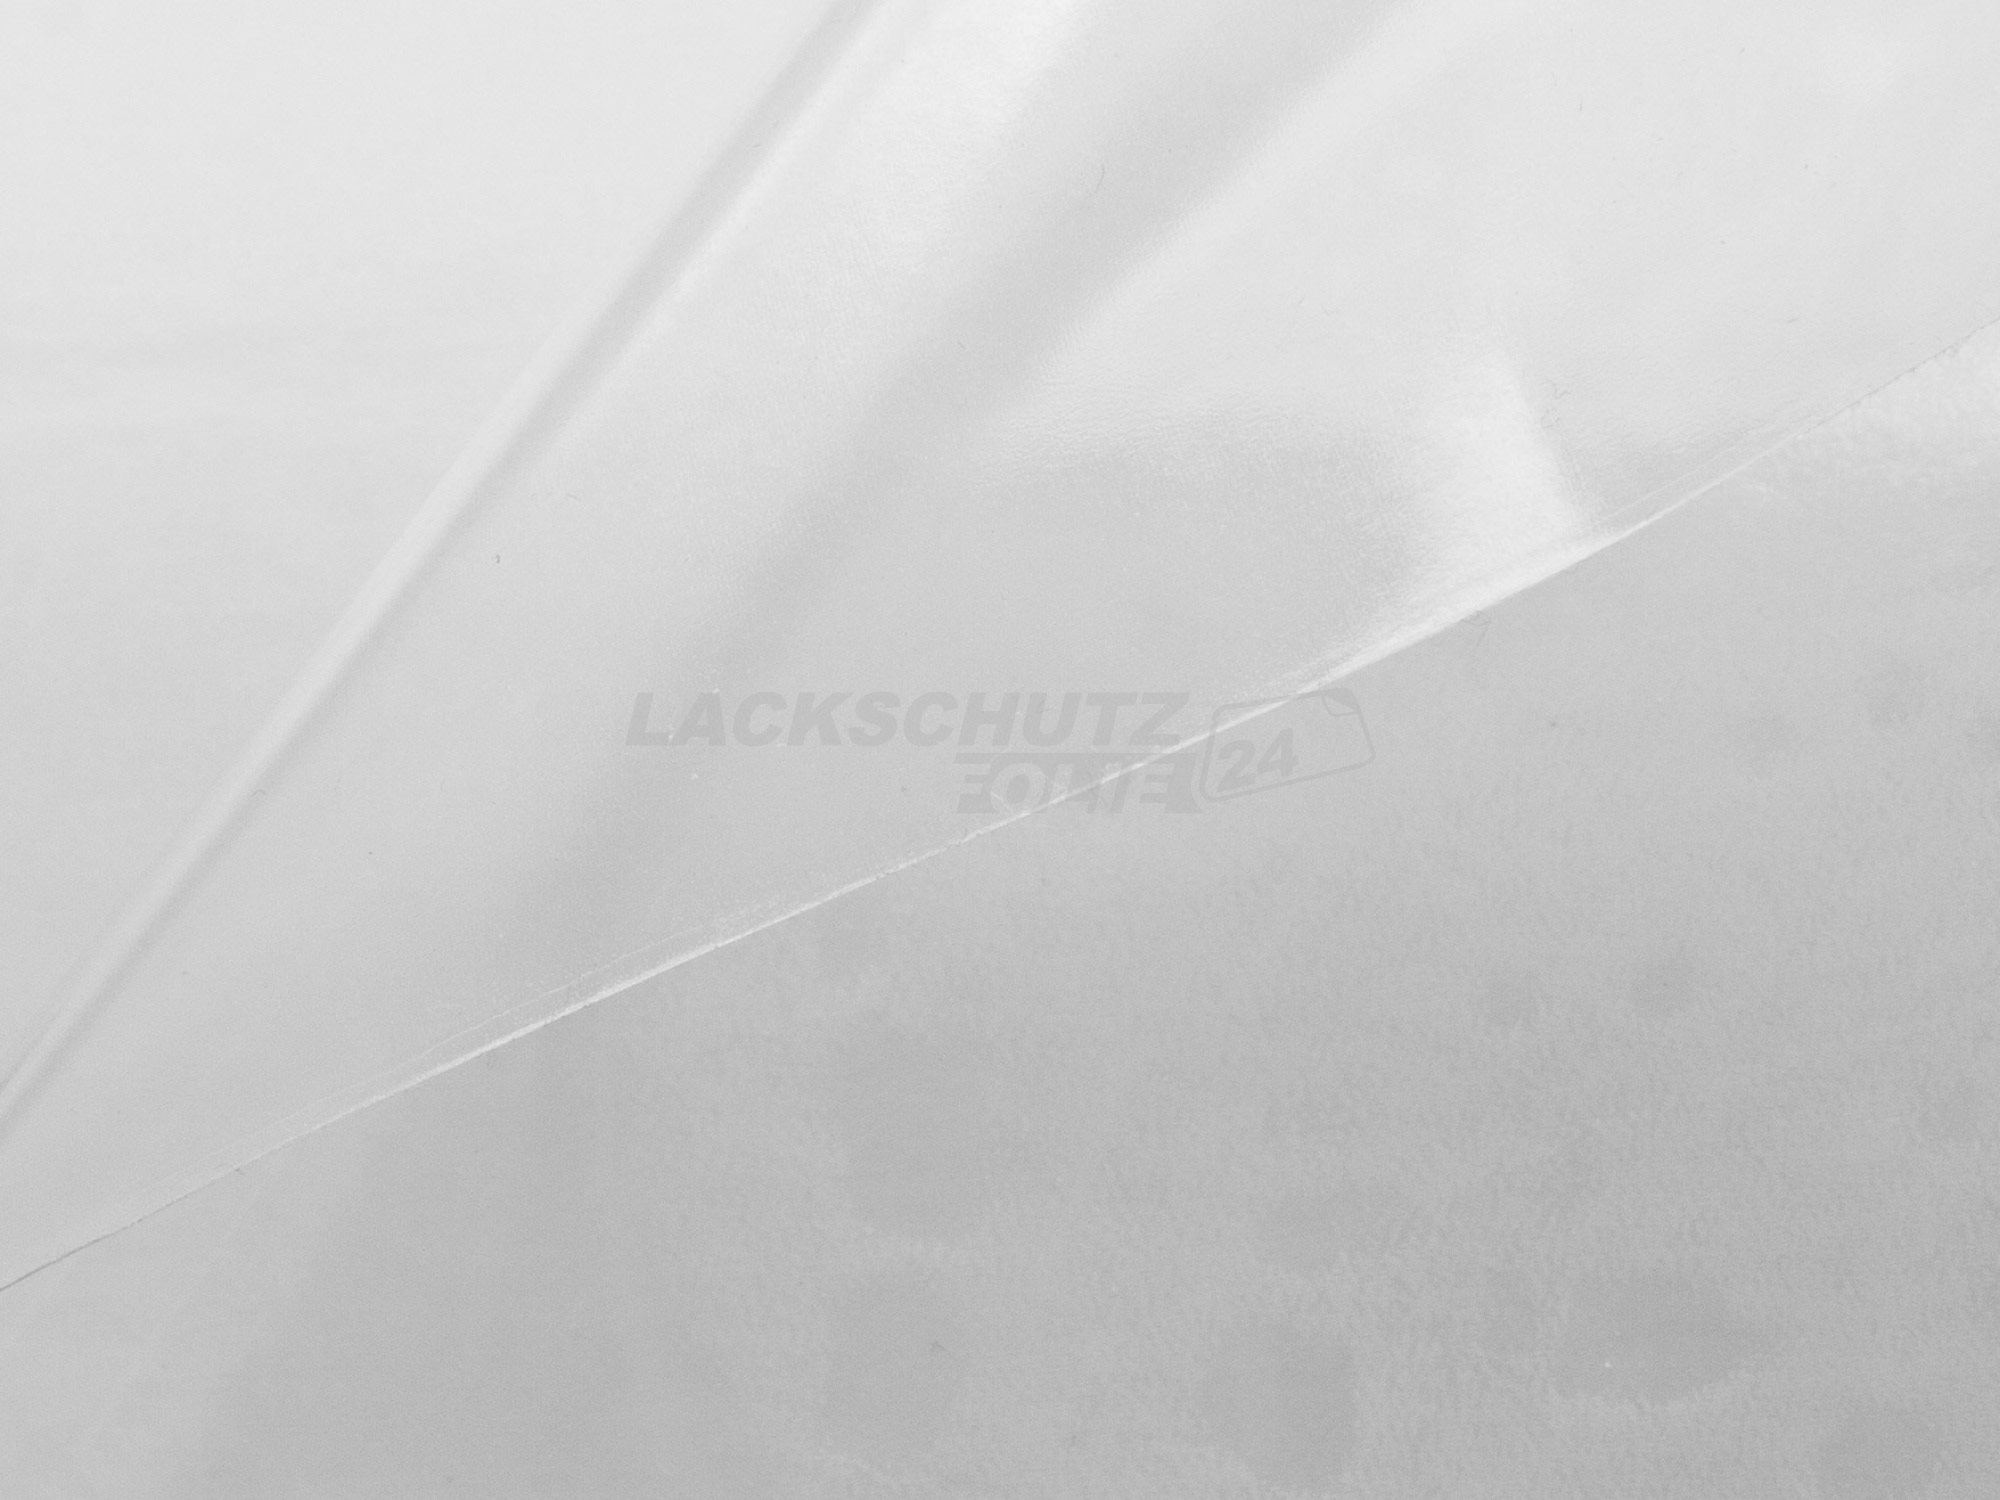 Ladekantenschutzfolie - Transparent Glatt Hochglänzend 240 µm stark für Toyota Previa BJ 2000-2009